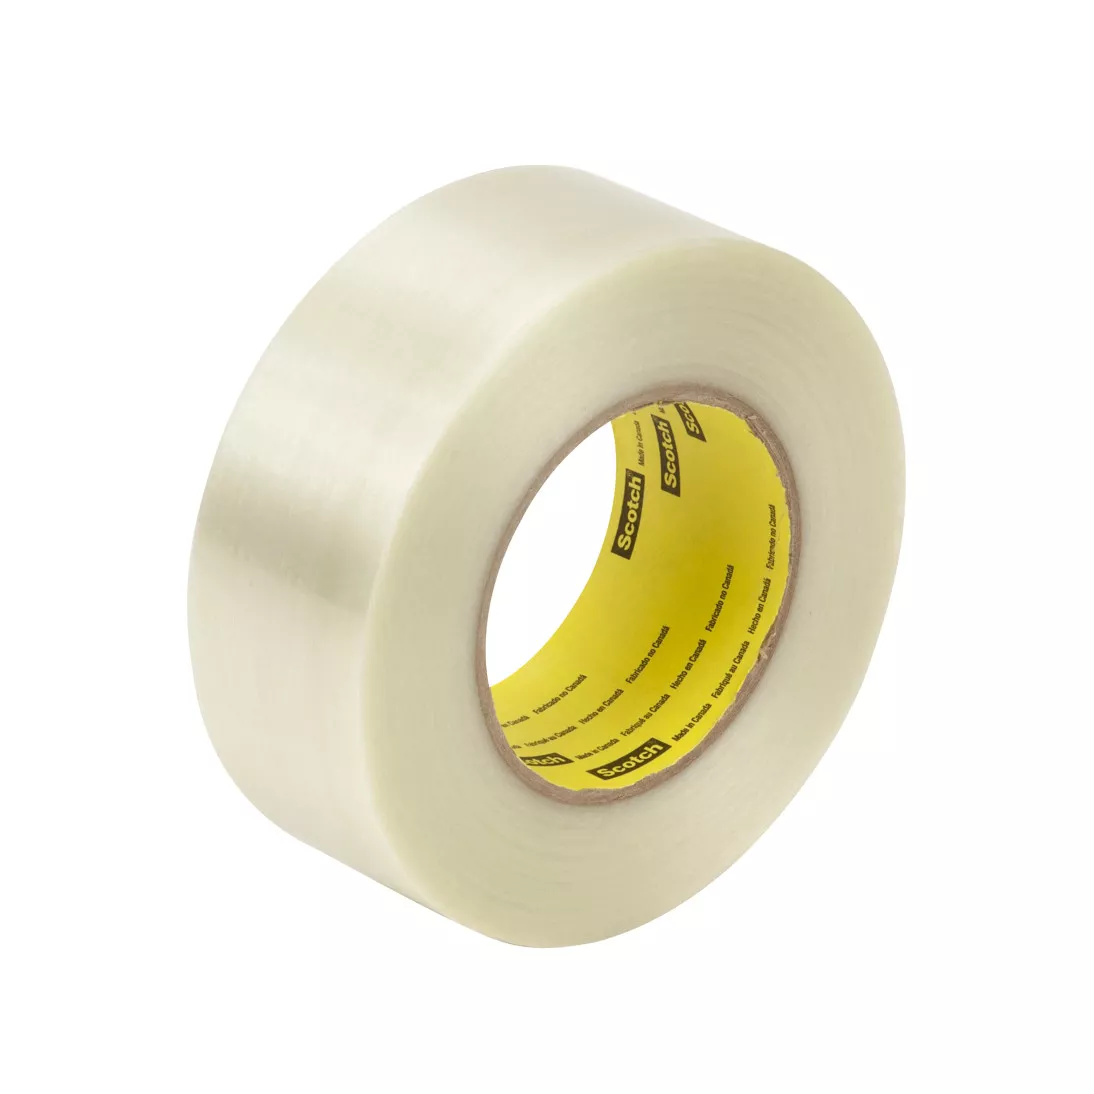 Scotch® Filament Tape 8919MSR, Clear, 12 mm x 55 m, 7 mil, 72 rolls per
case